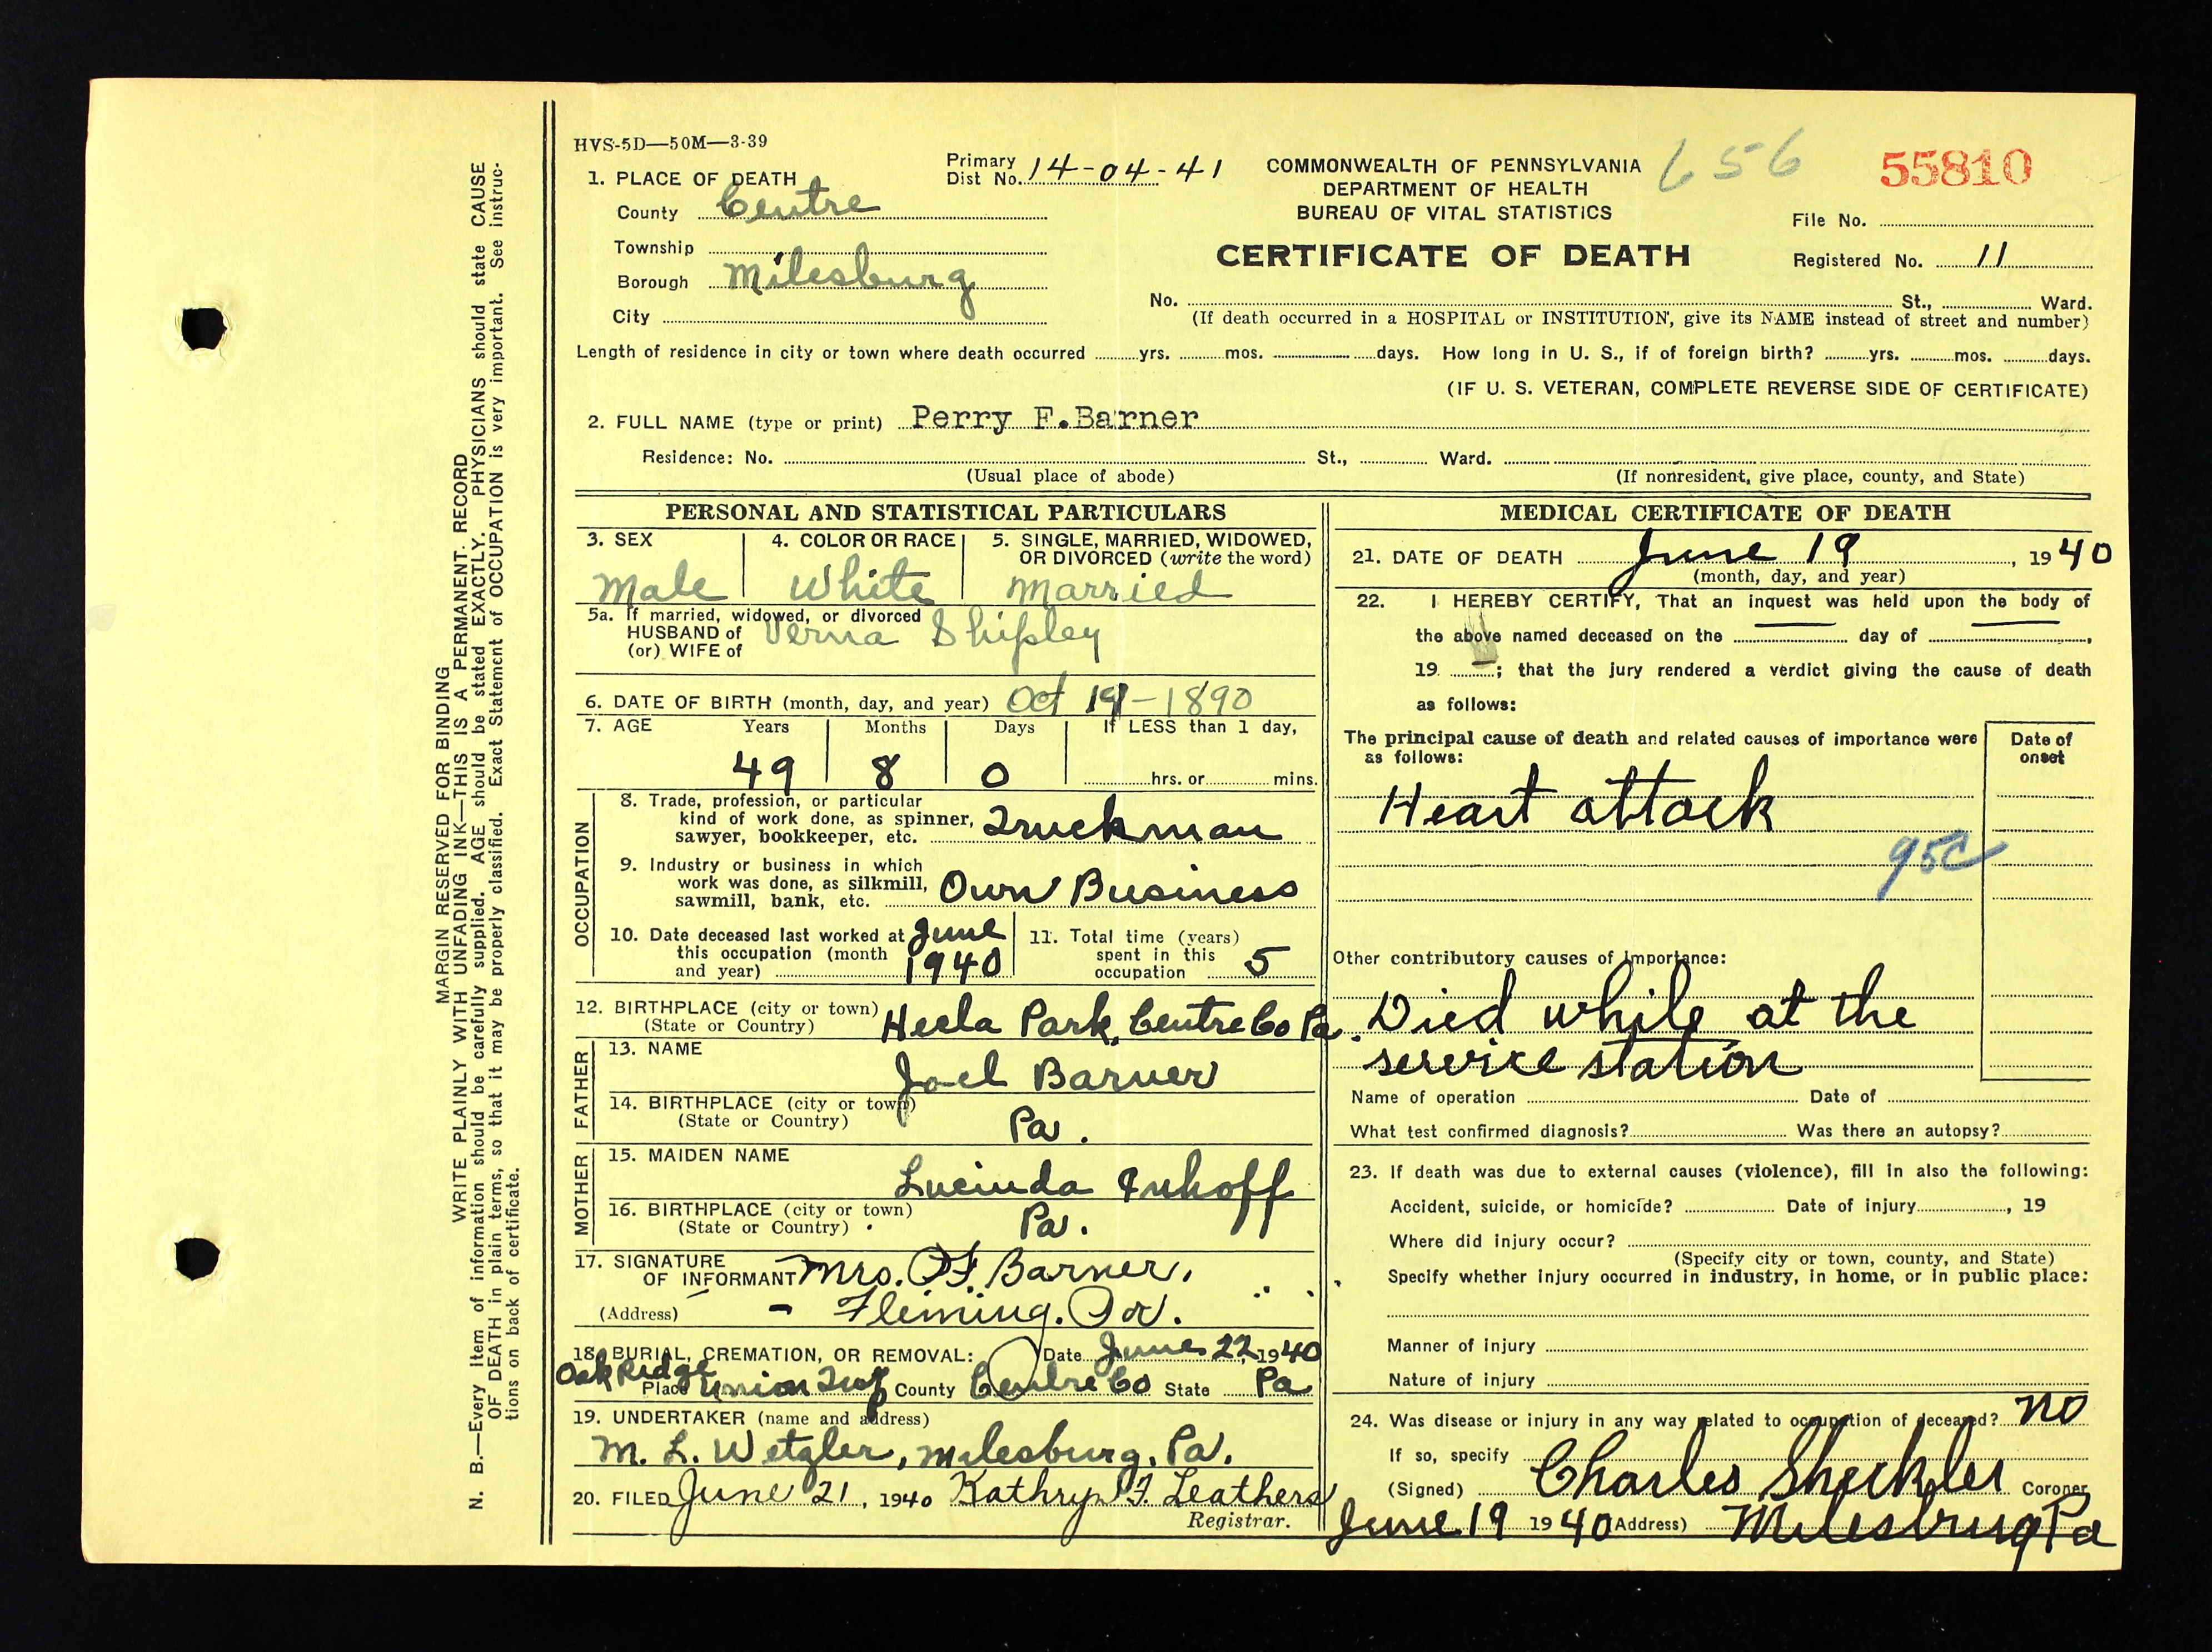 Perry Franklin Barner, Pennsylvania, Death Certificate